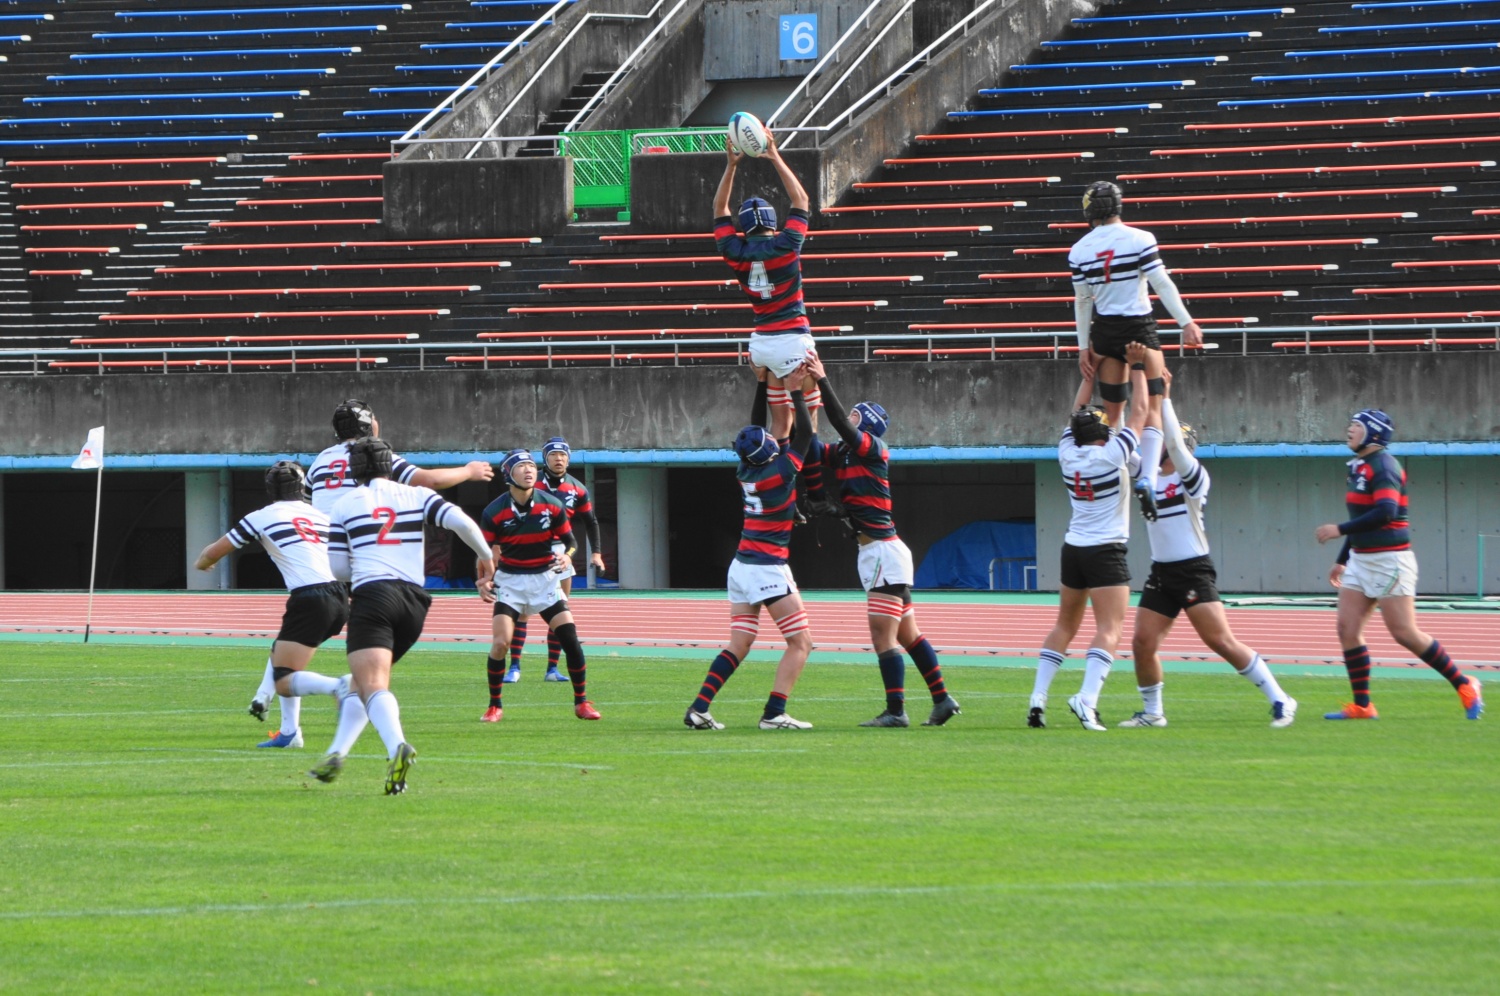 http://kokura-rugby.sakura.ne.jp/DSC_0280_xlarge.JPG